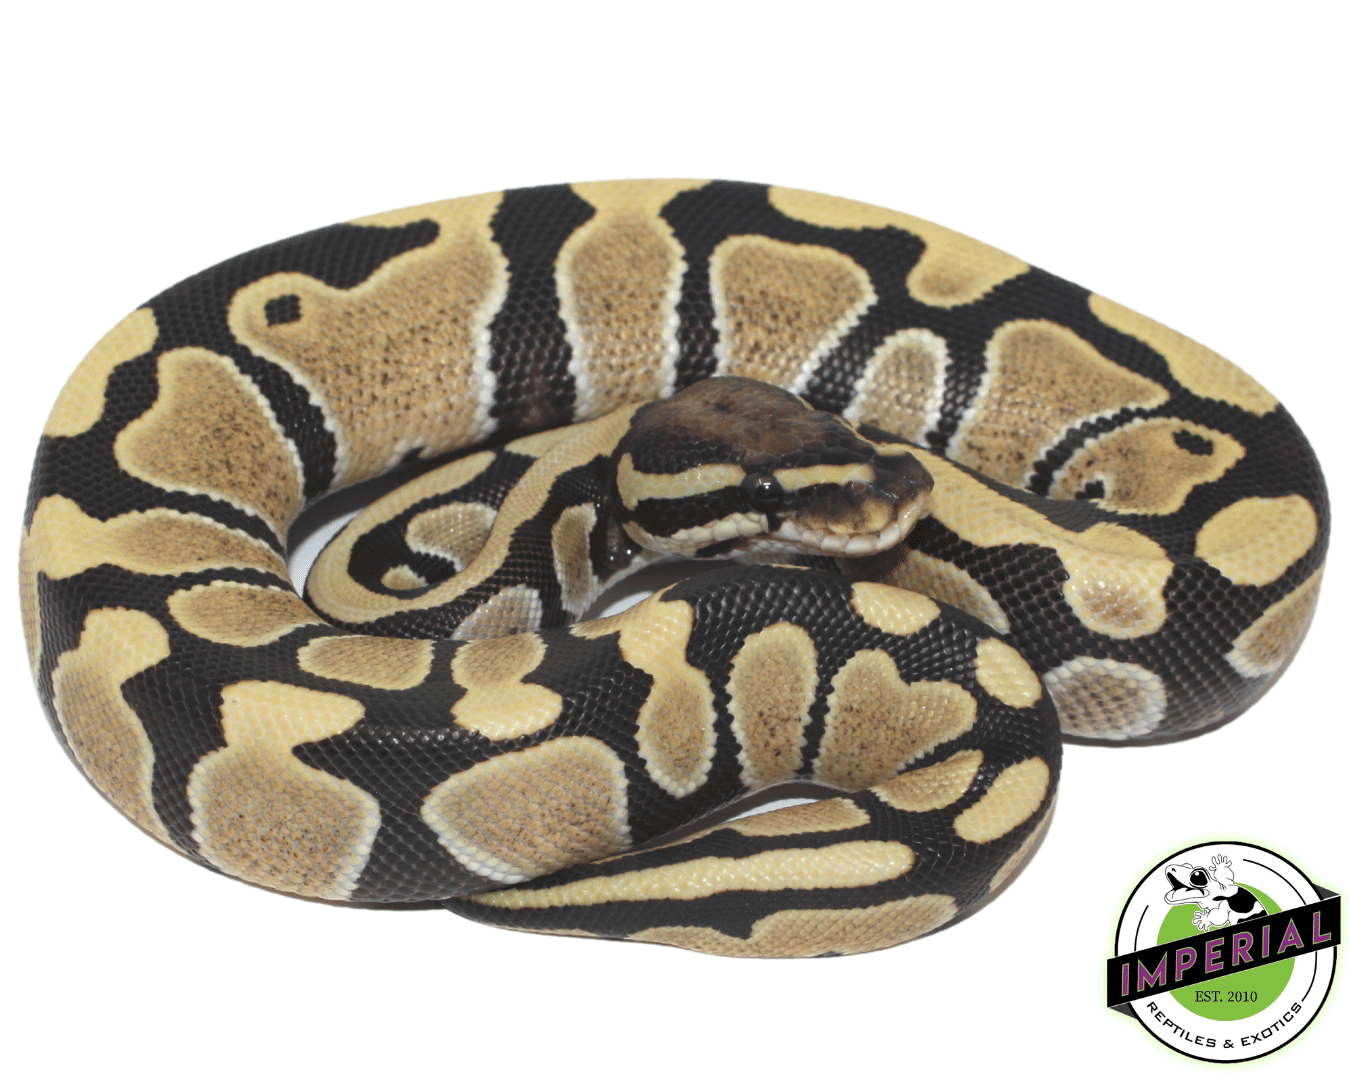  desert ghost ball python for sale, buy reptiles online